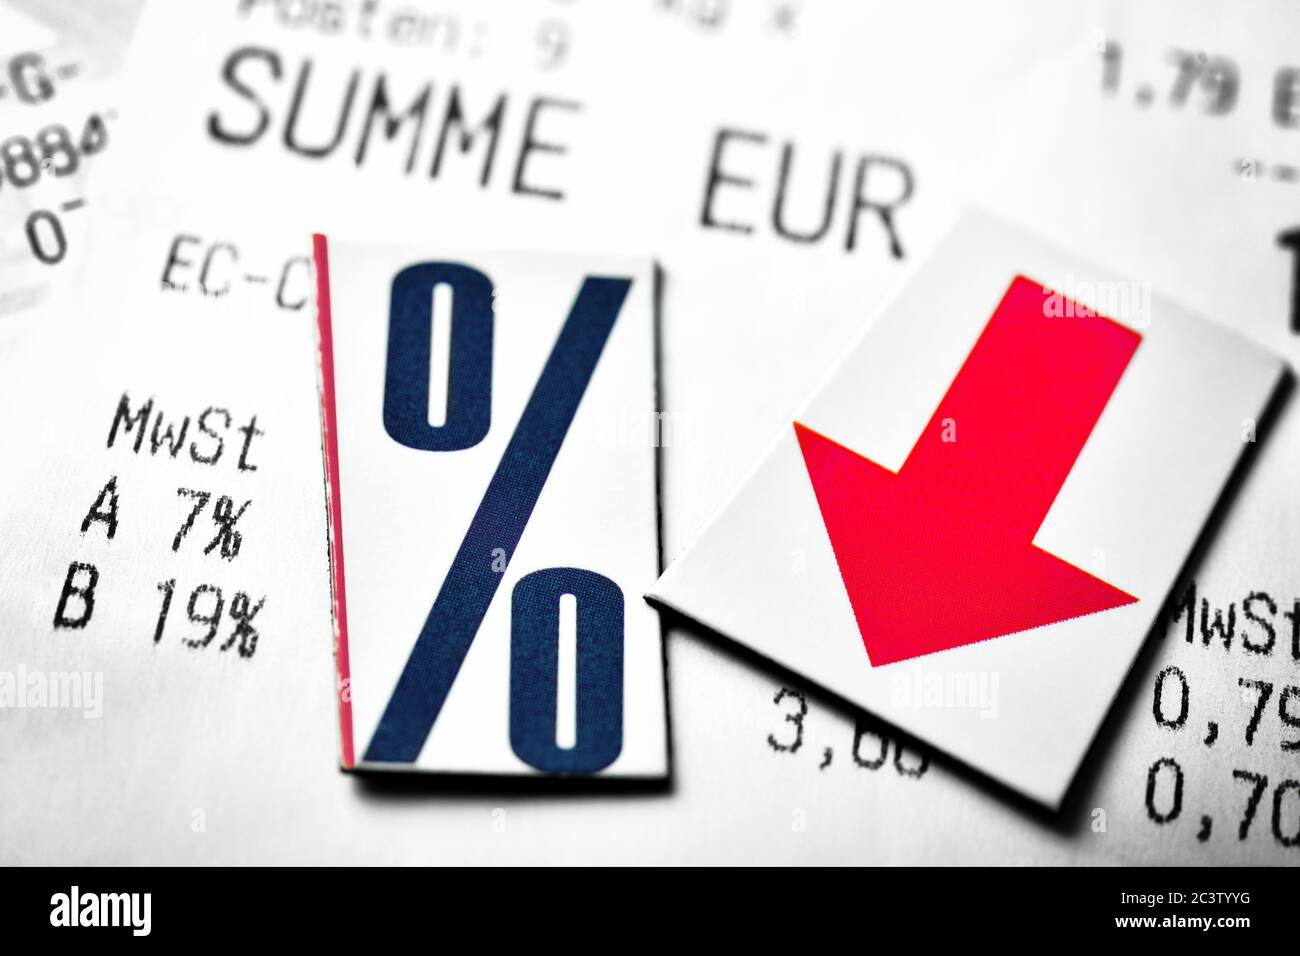 Percent sign and downward pointing arrow on receipts, symbol photo for VAT cut to stimulate the economy, Prozentzeichen und abwärts gerichteter Pfeil Stock Photo